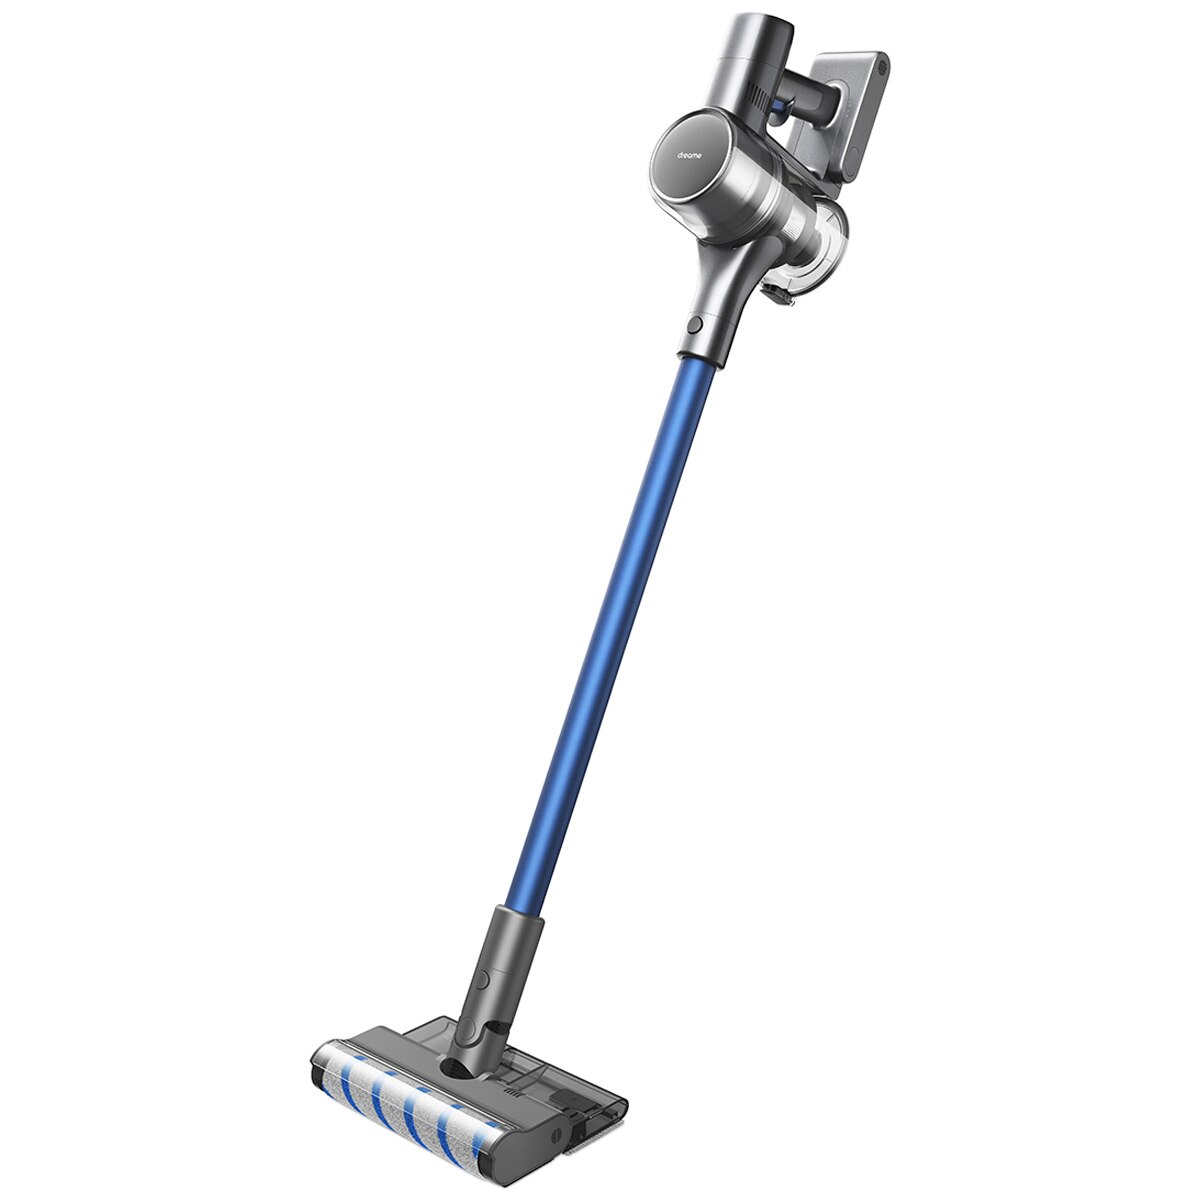 Dreame T20 Pro Stick Vacuum Cleaner